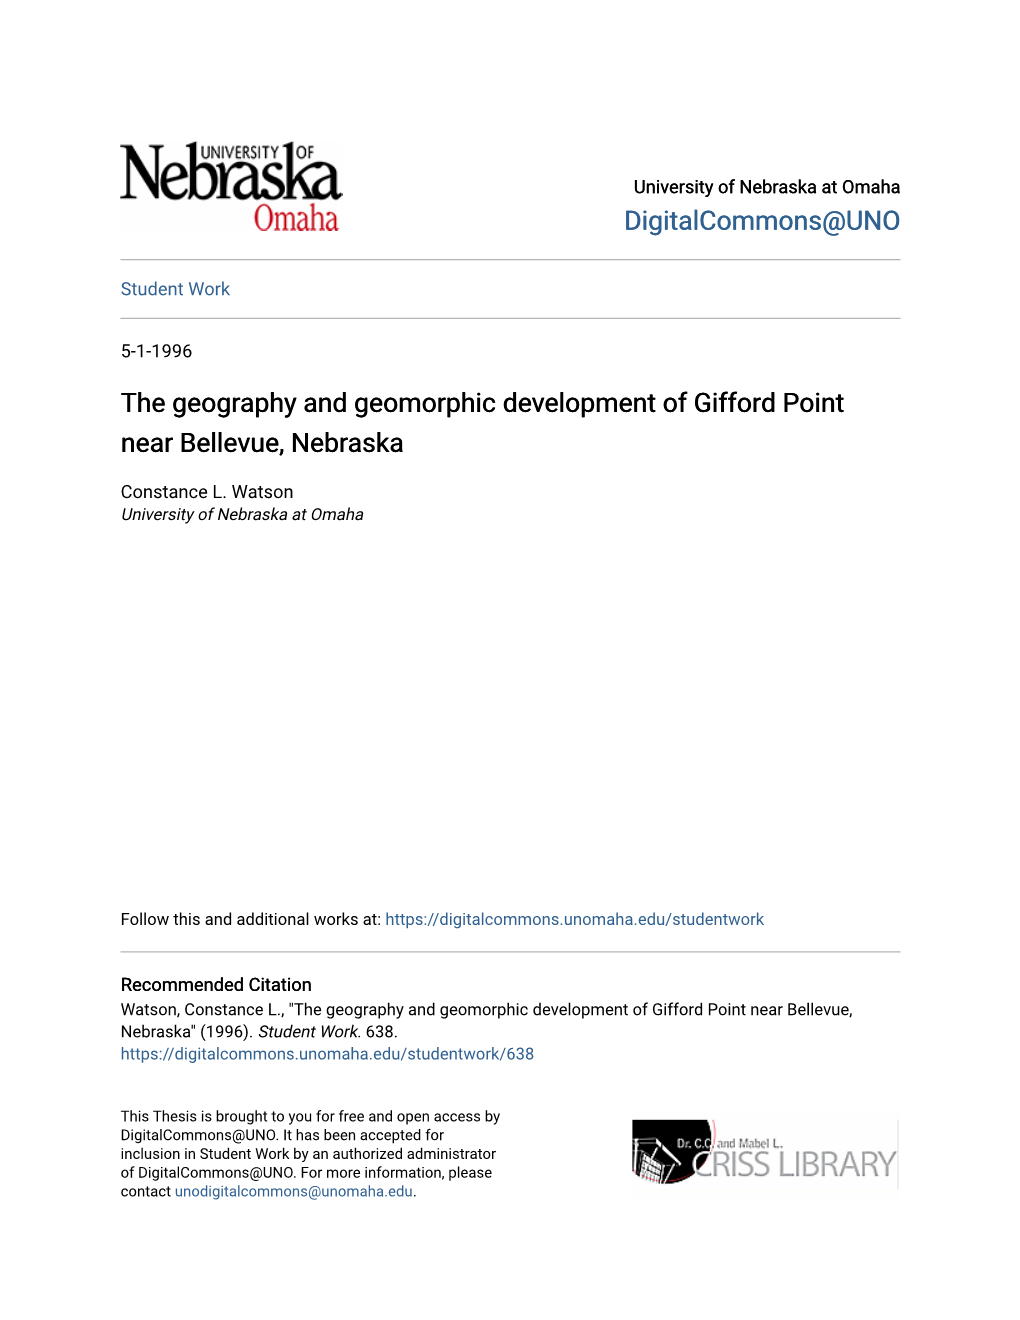 The Geography and Geomorphic Development of Gifford Point Near Bellevue, Nebraska